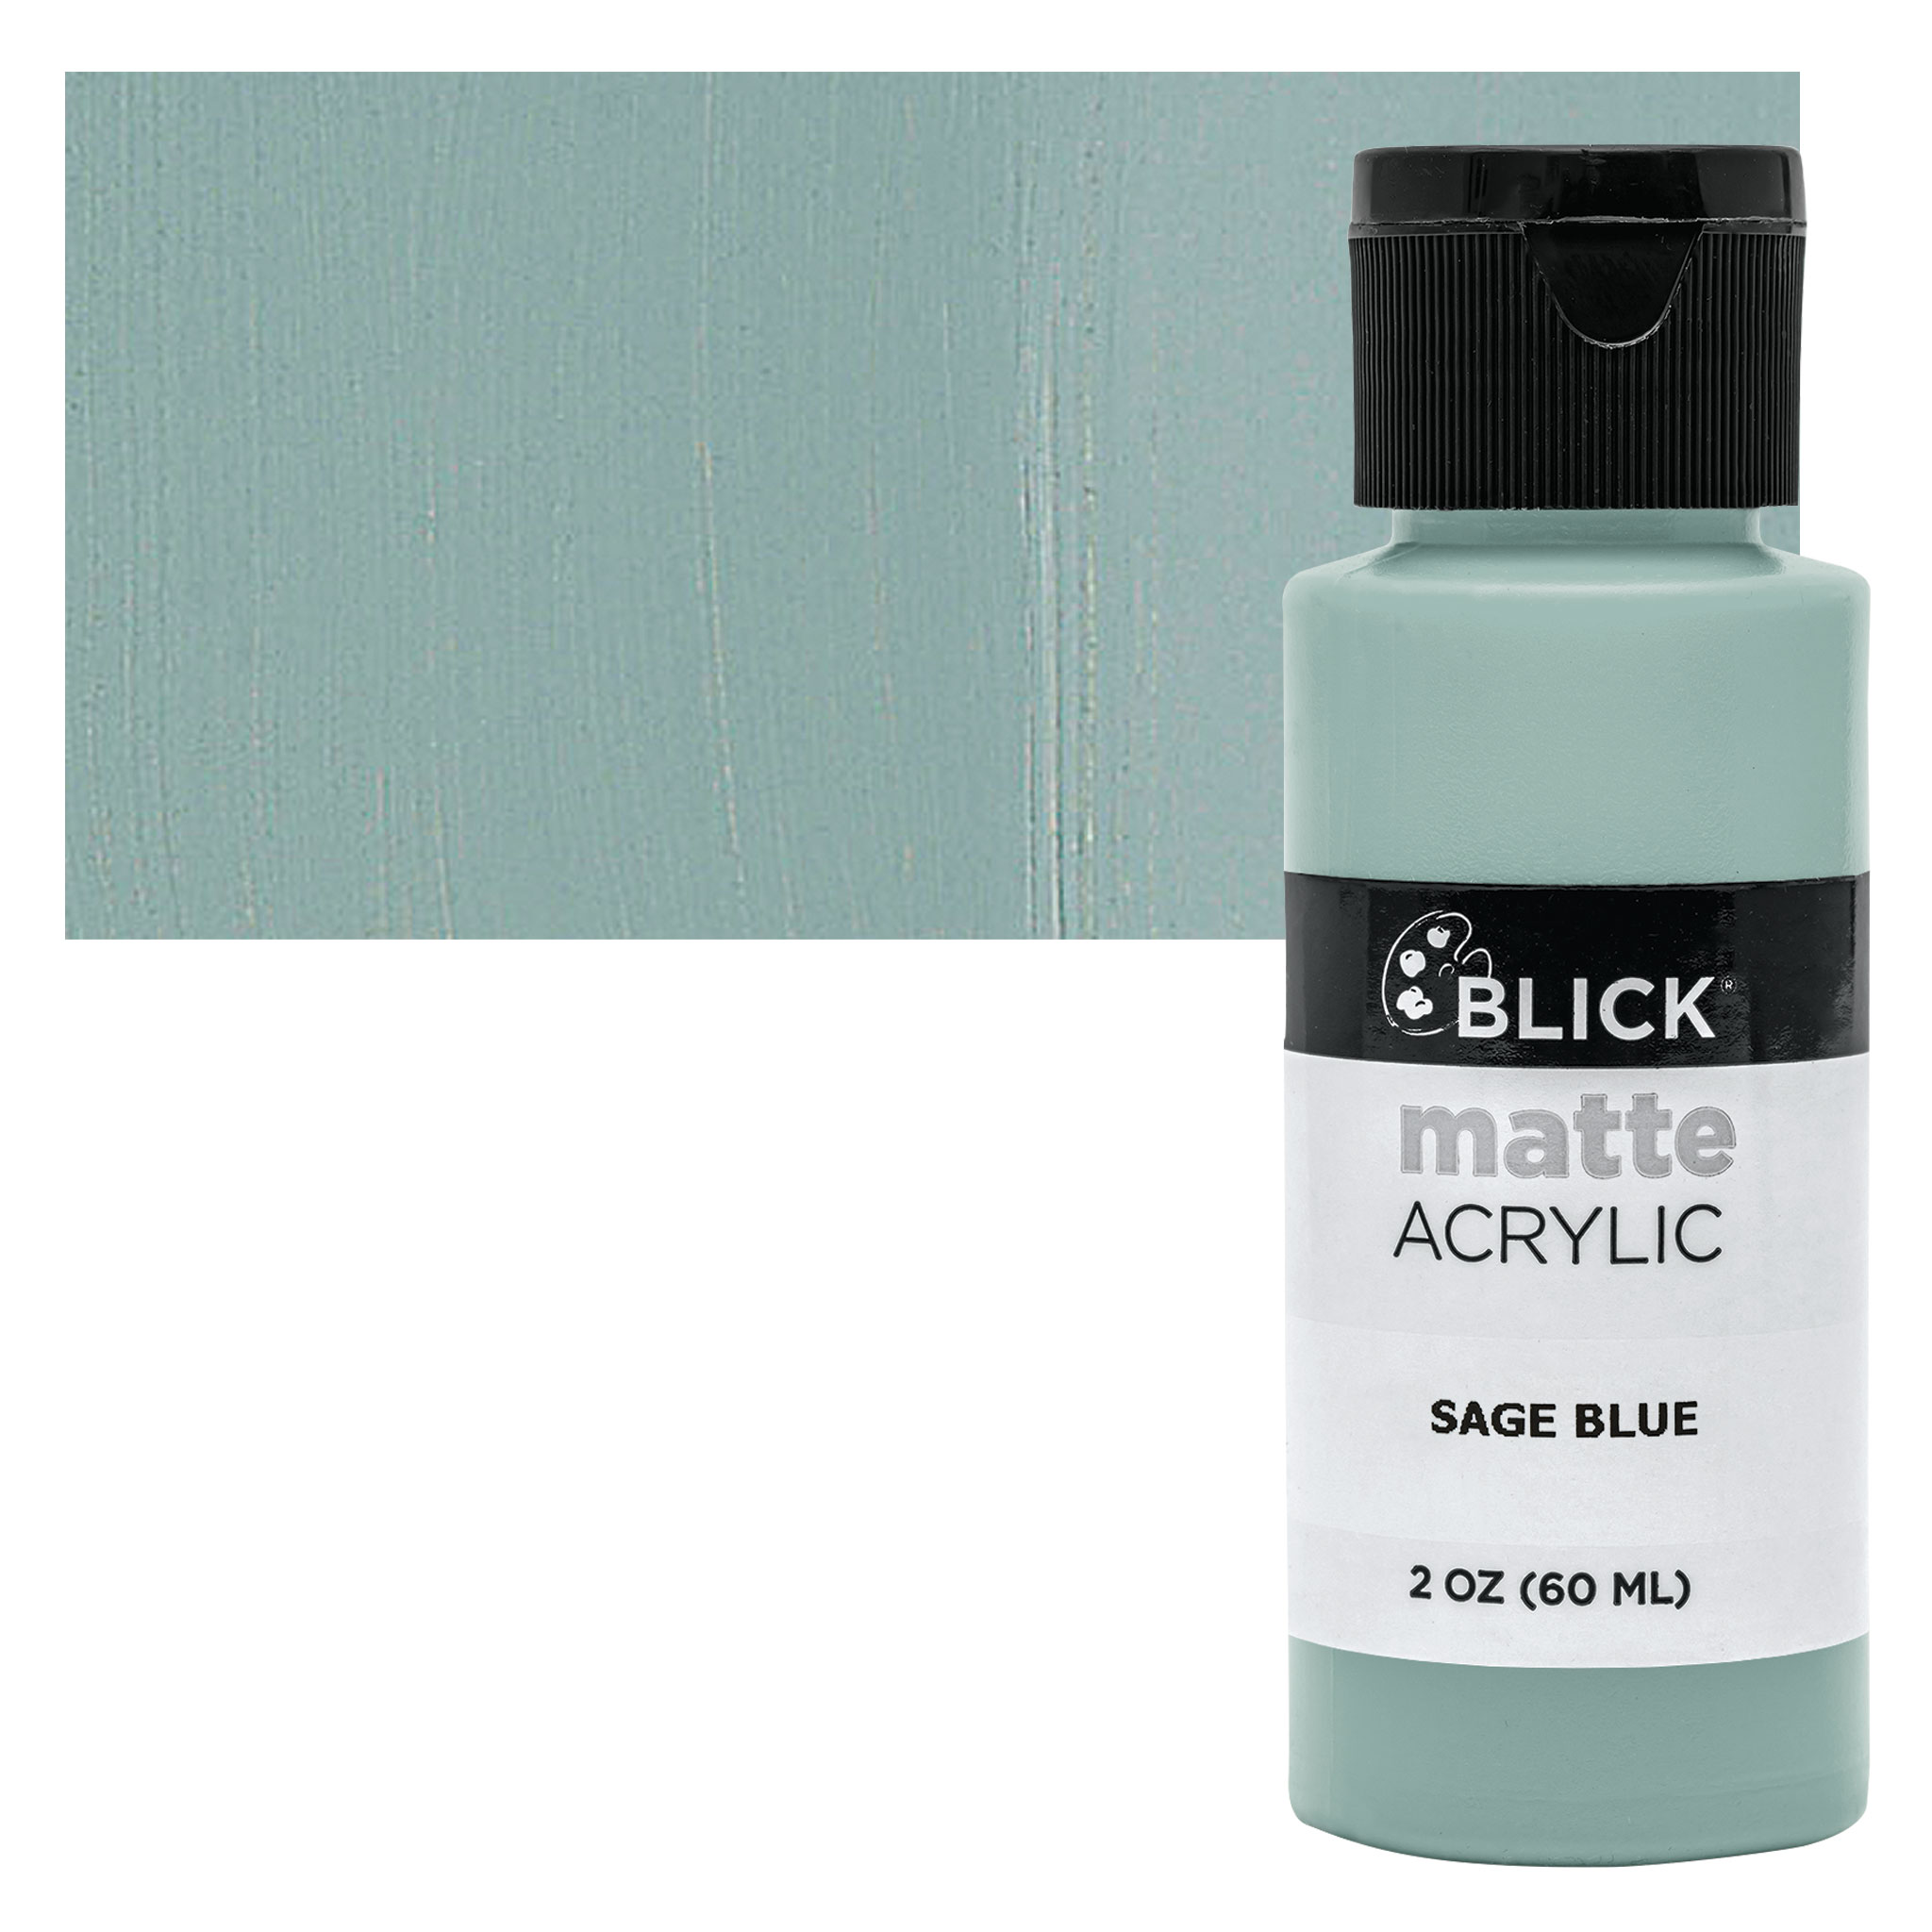 Blick Matte Acrylic Paints and Sets